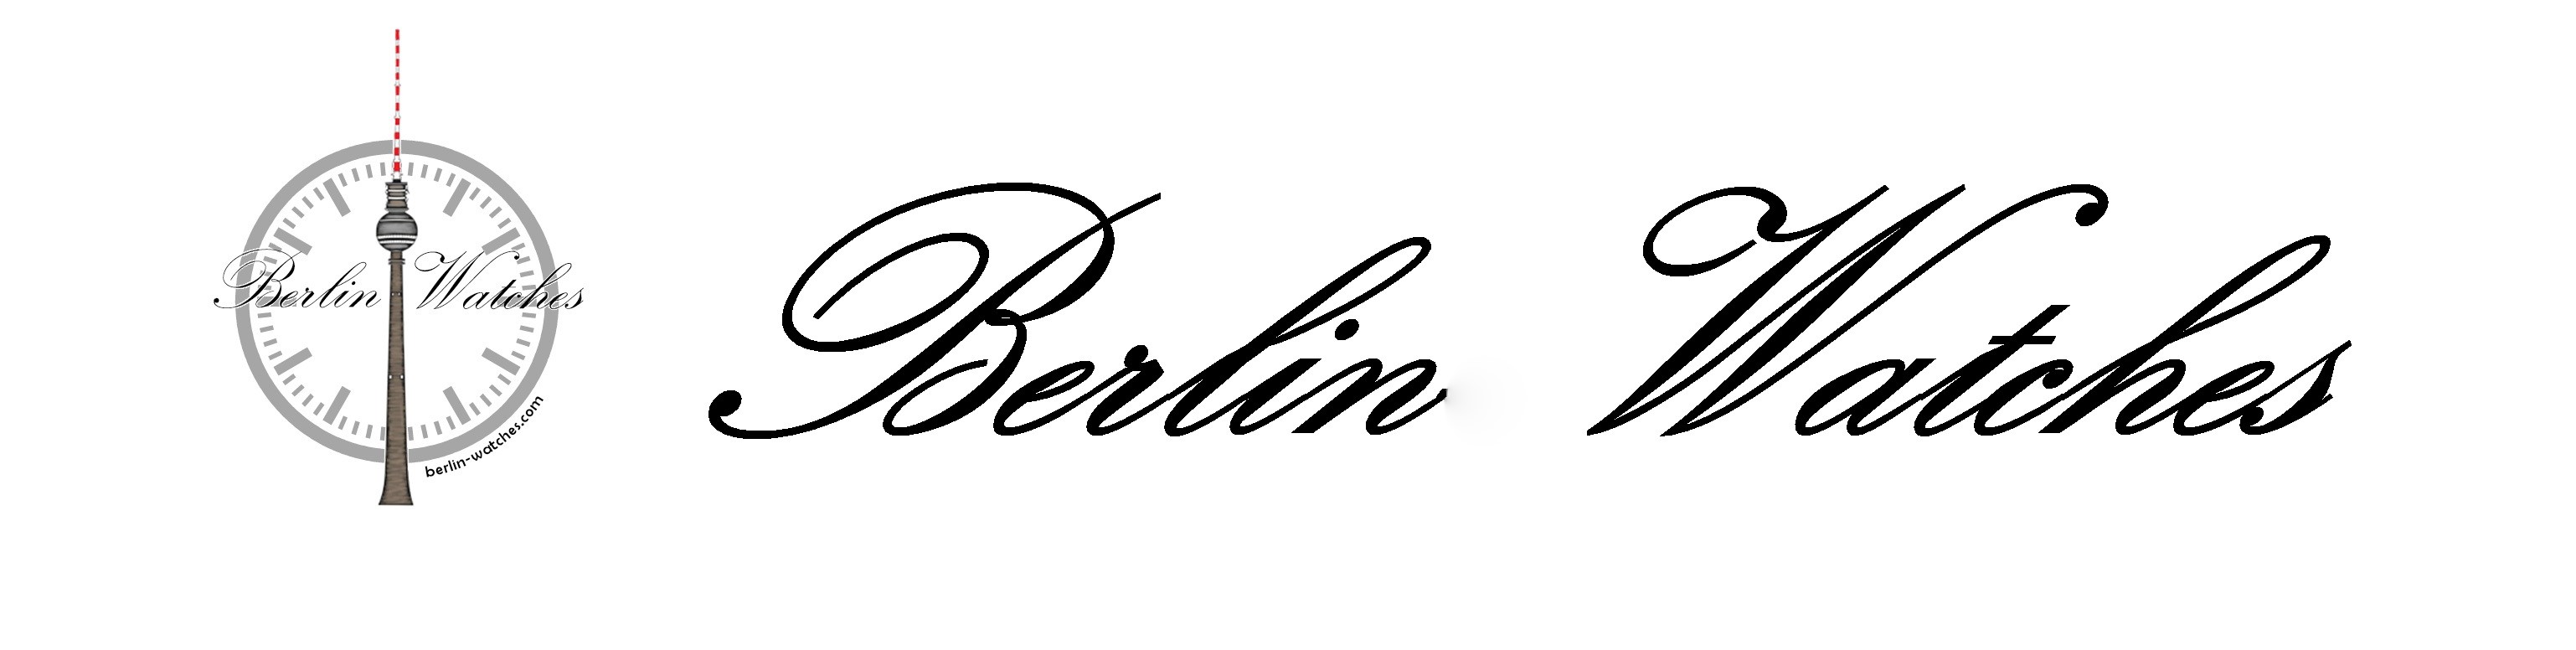 berlin-watches